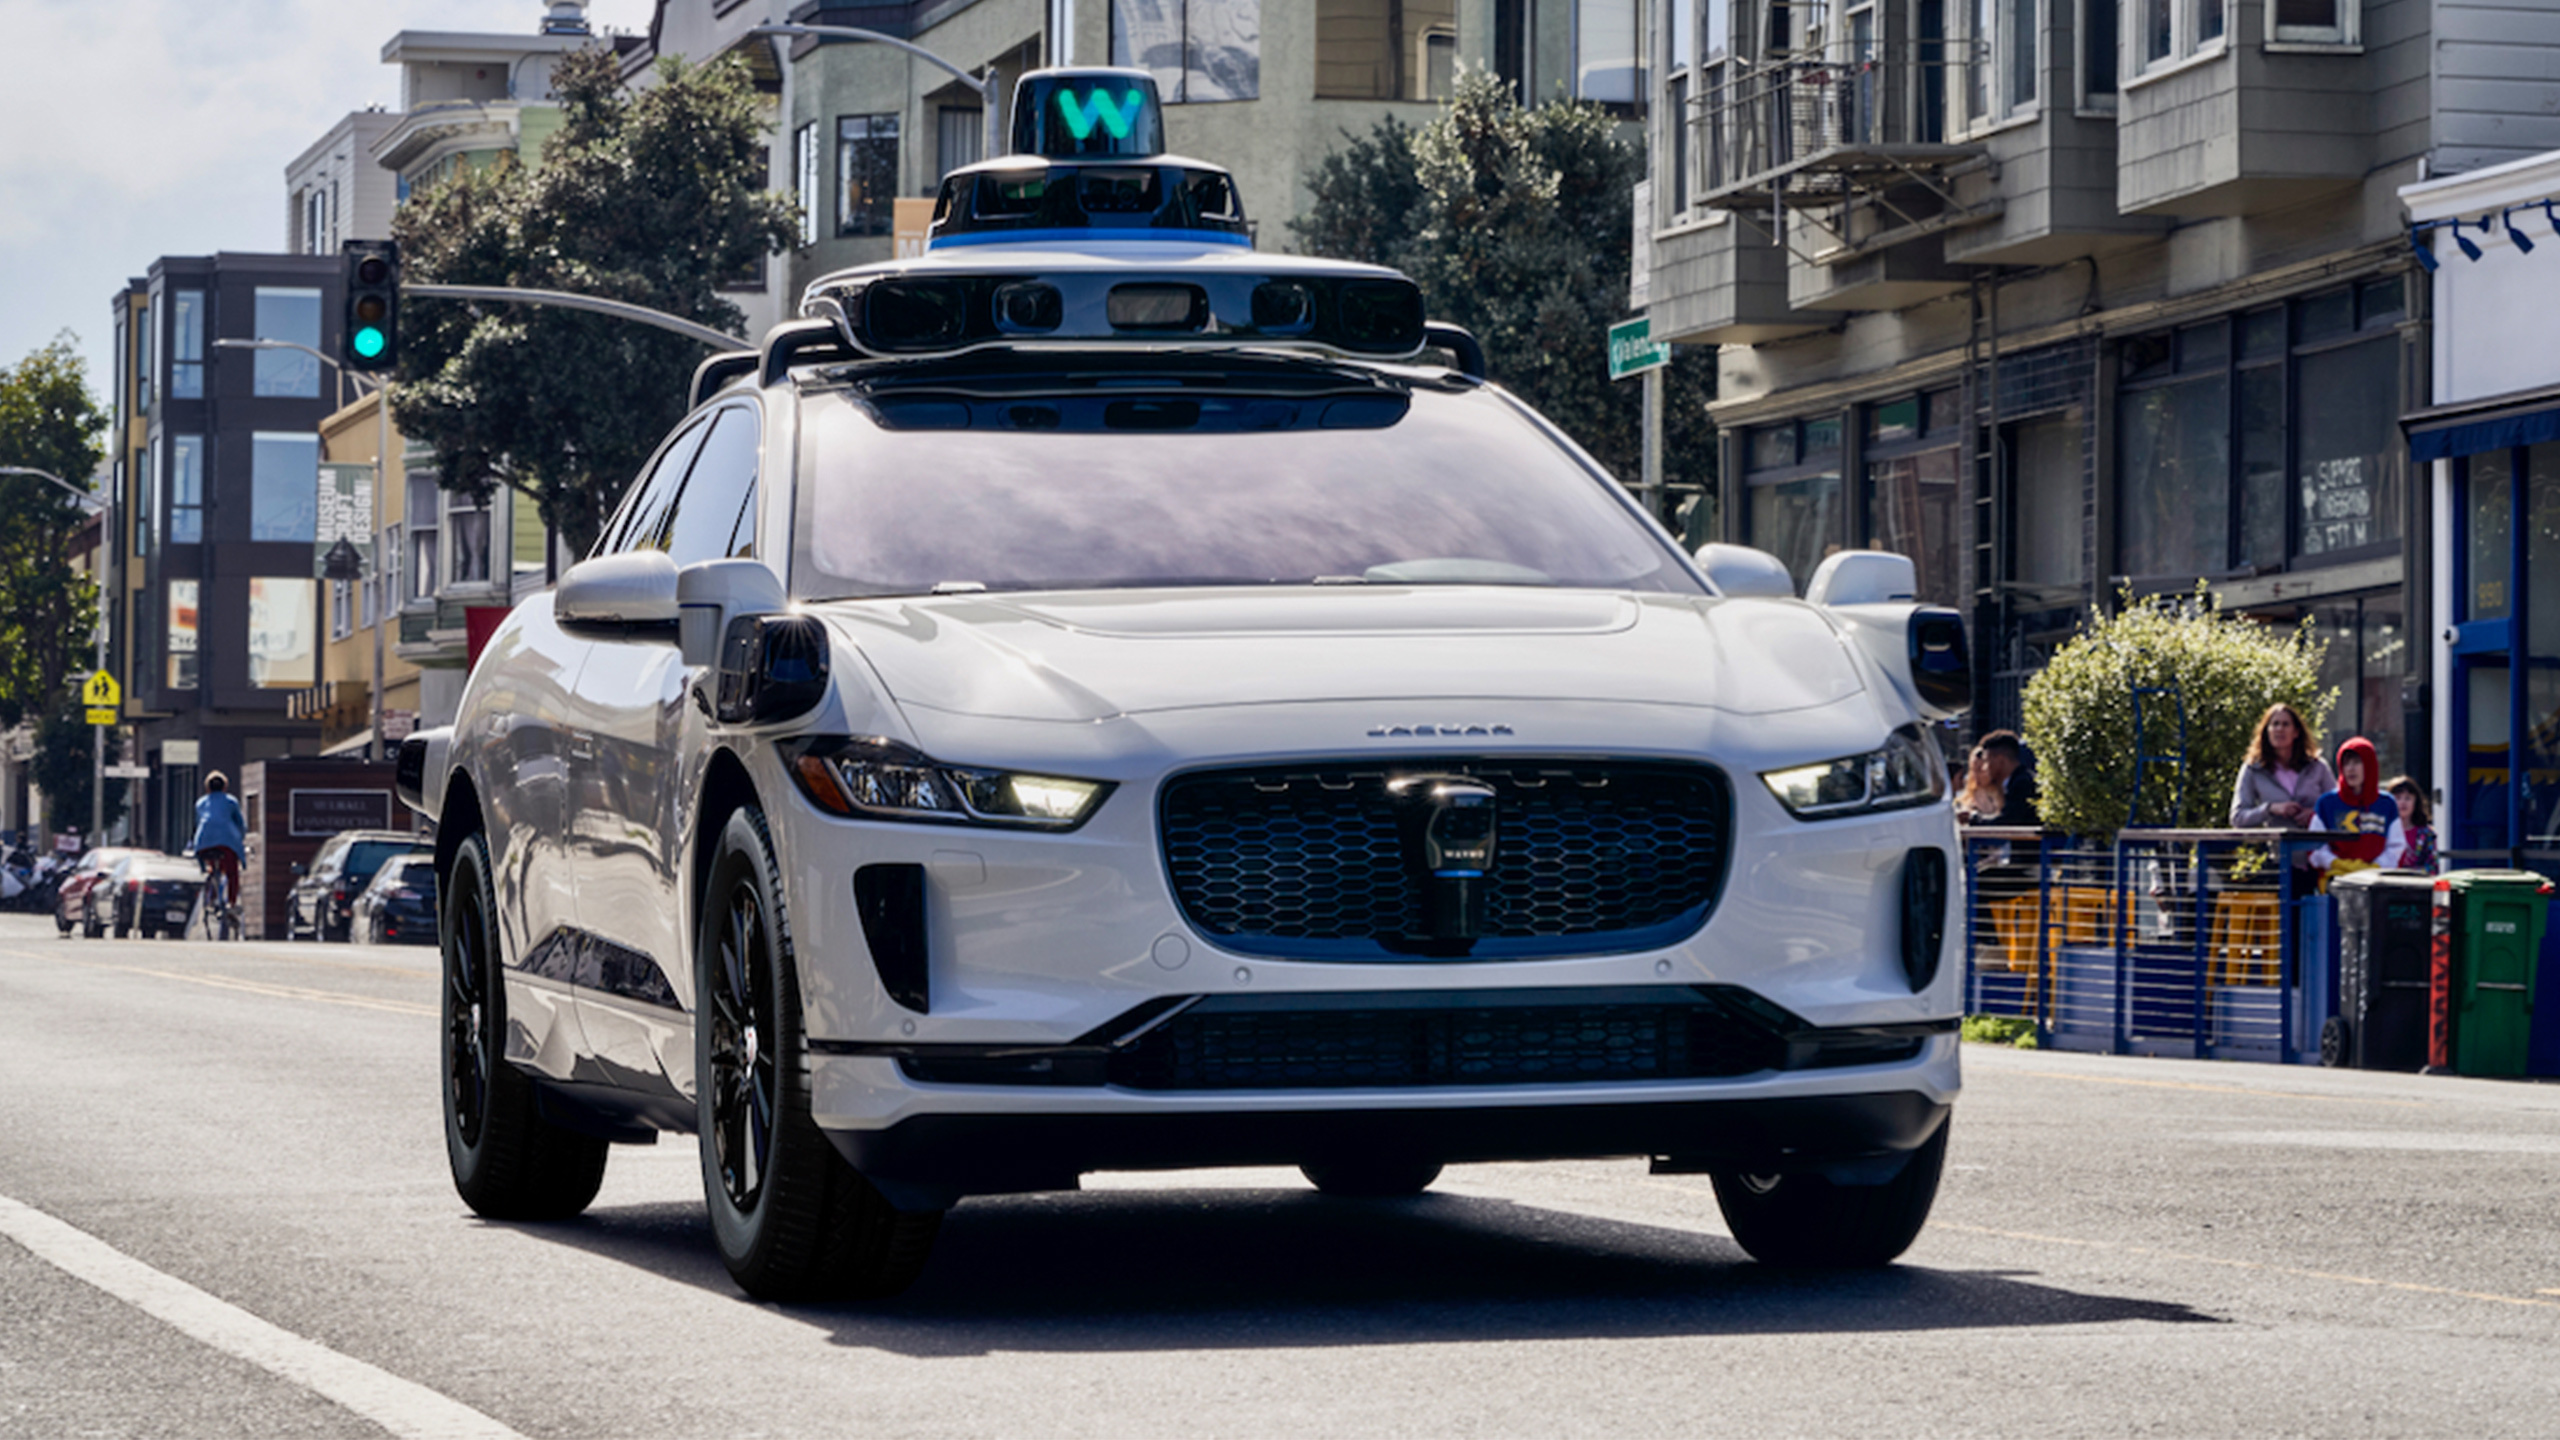 Waymo - Self-Driving Cars - Autonomous Vehicles - Ride-Hail